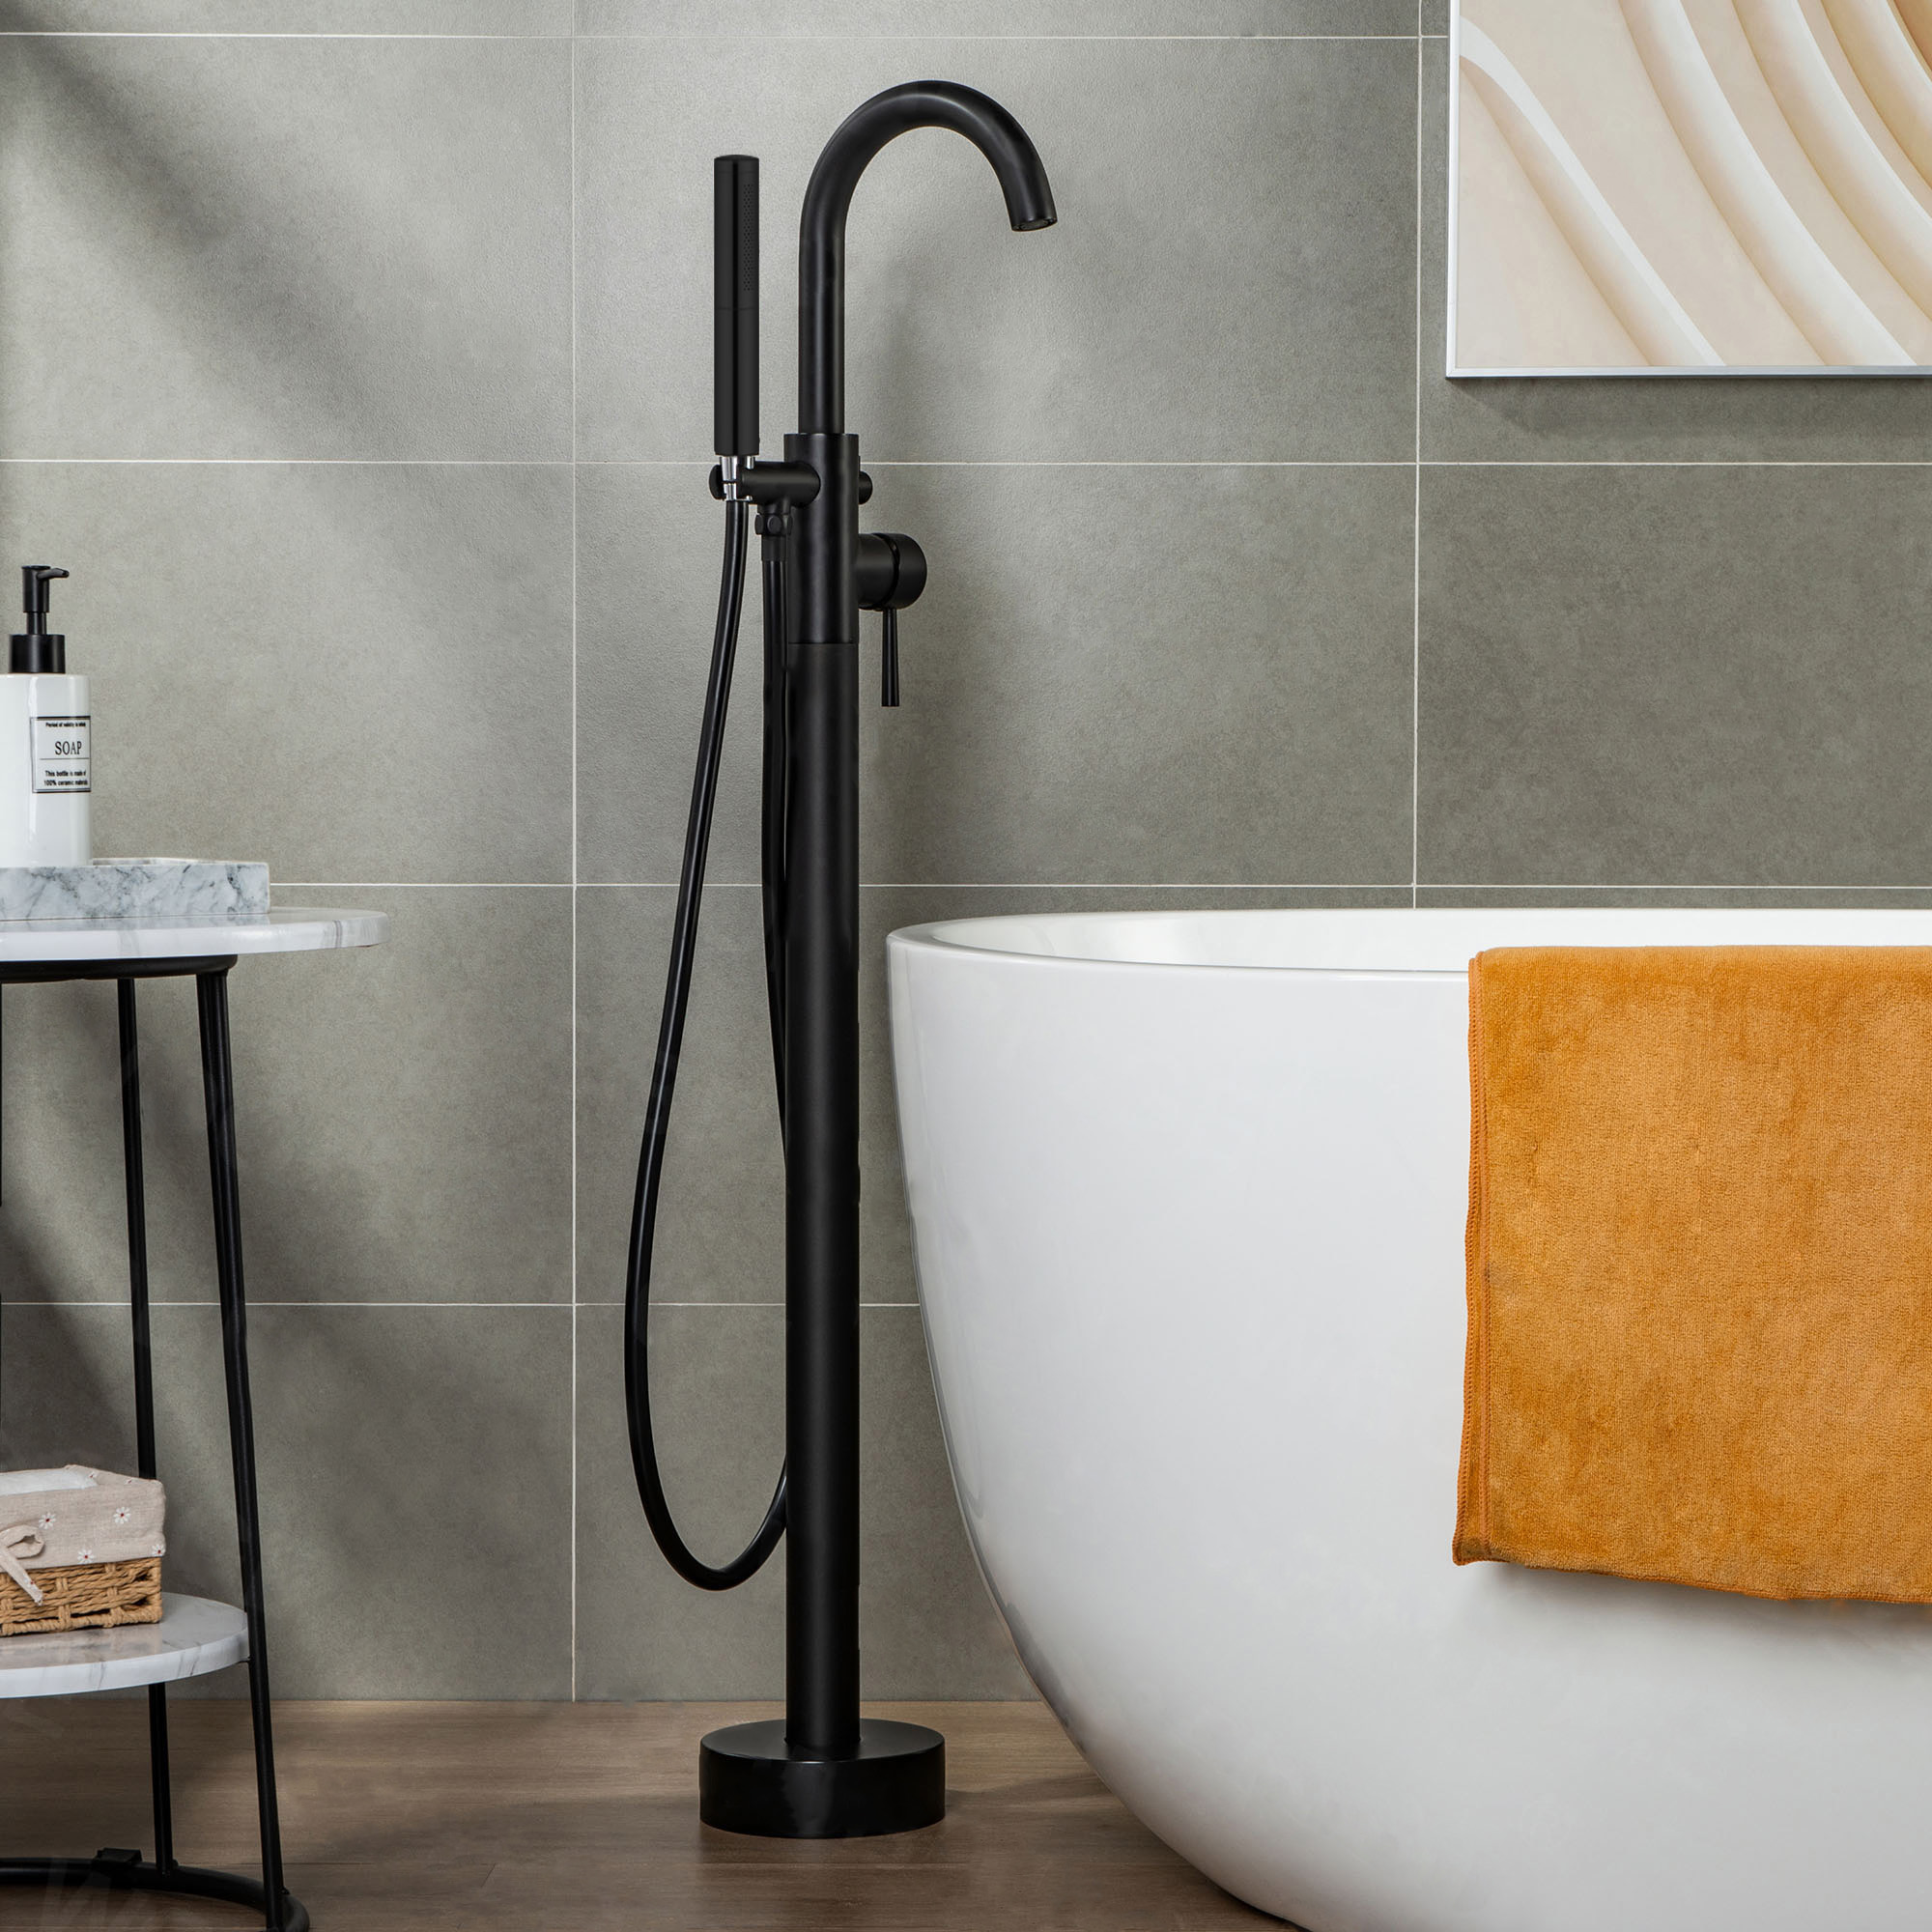  WOODBRIDGE F0006MBDR Contemporary Single Handle Floor Mount Freestanding Tub Filler Faucet with Hand shower in Matte Black Finish._14897